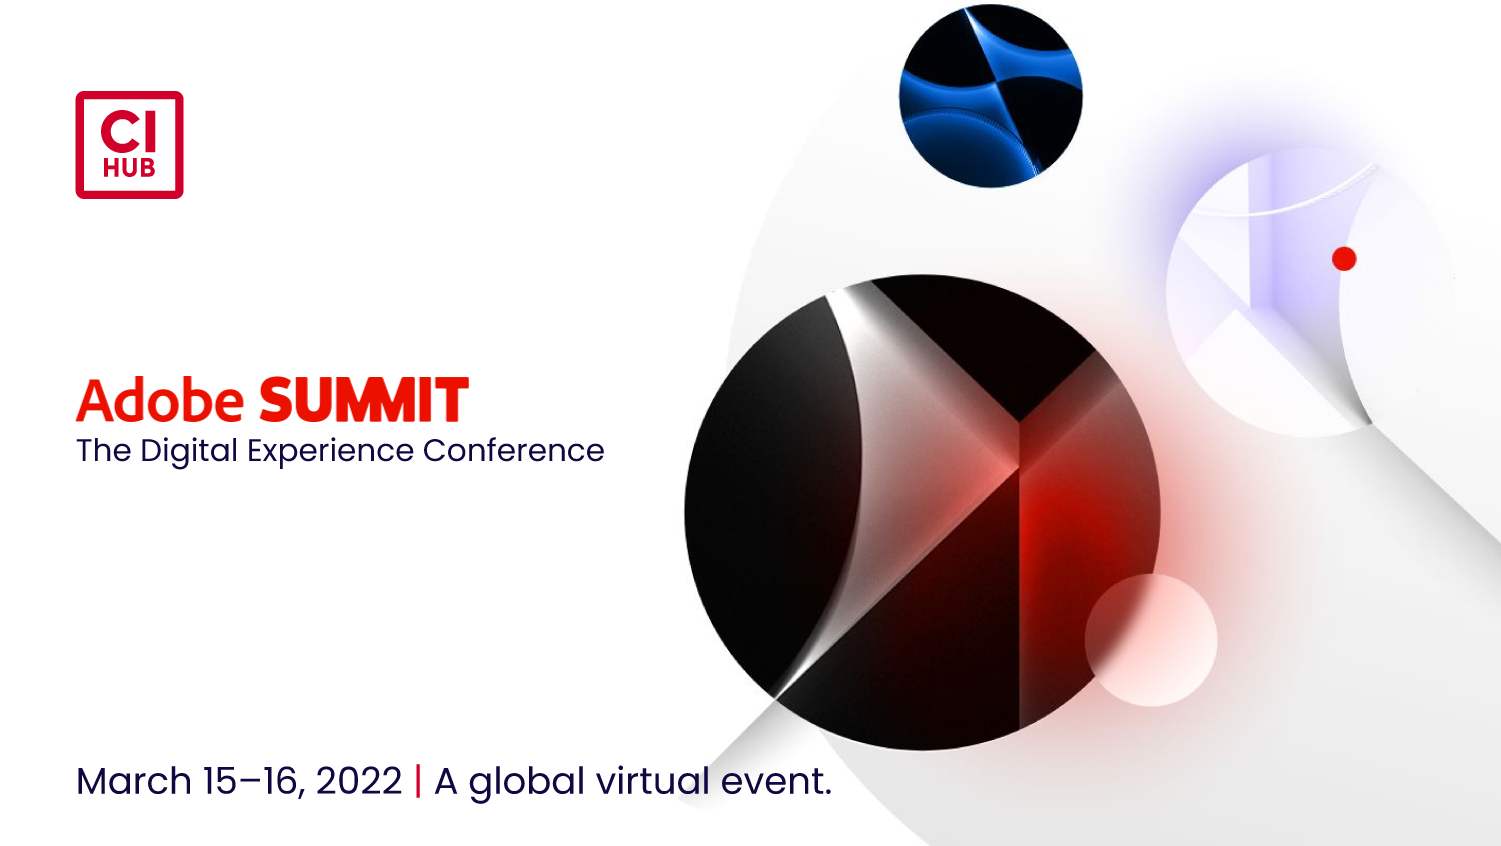 CI HUB proud sponsor of Adobe Summit 2022